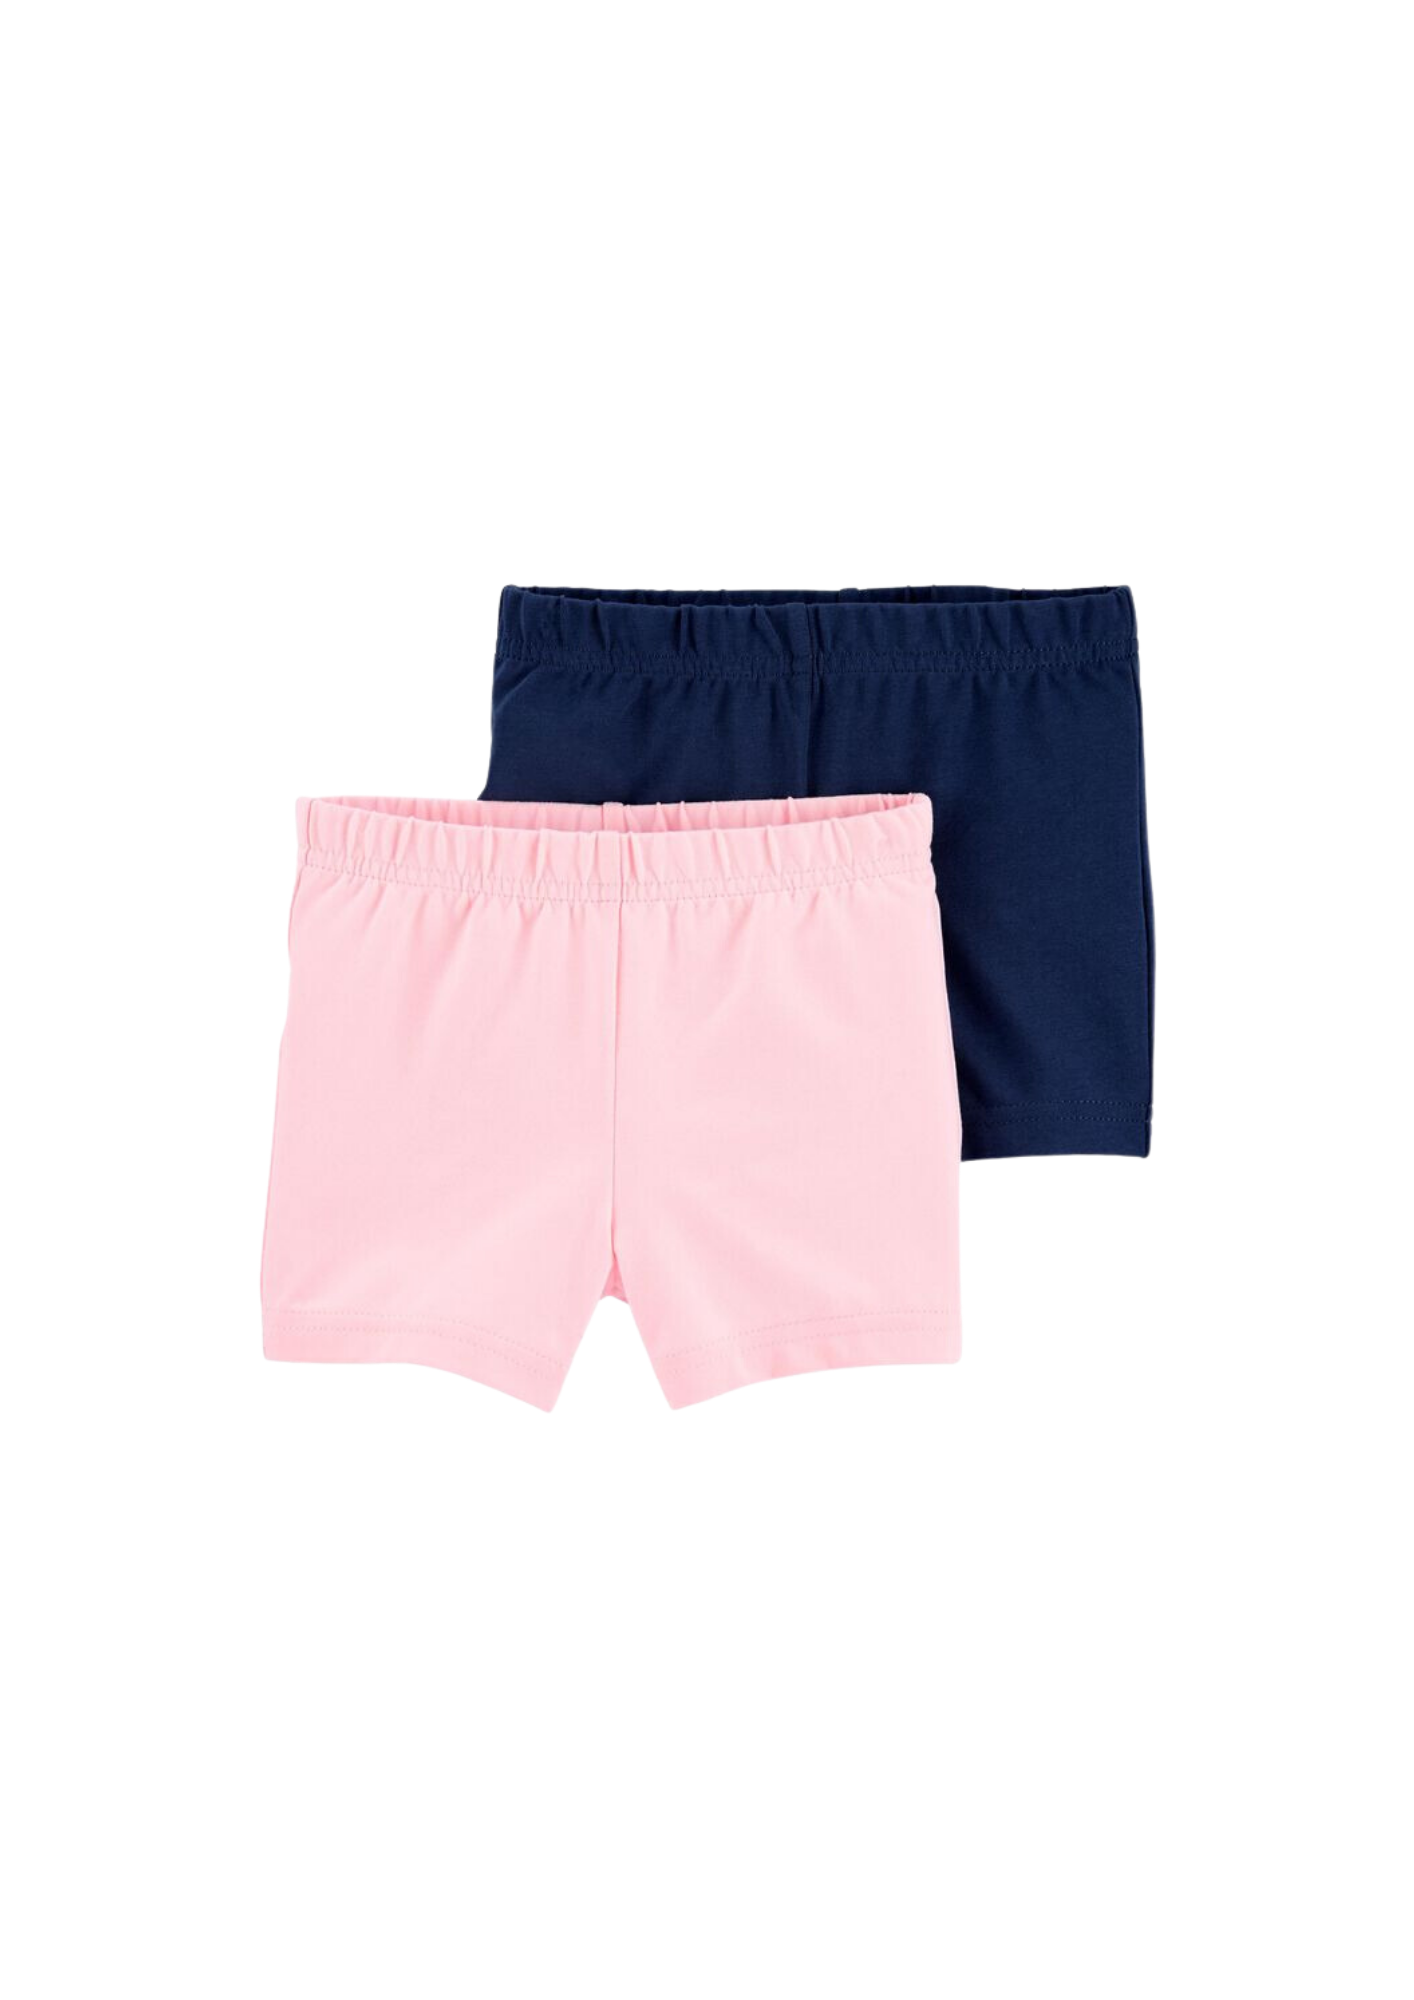 Carter's - Paquete con 2 shorts tipo legging color rosa y azul